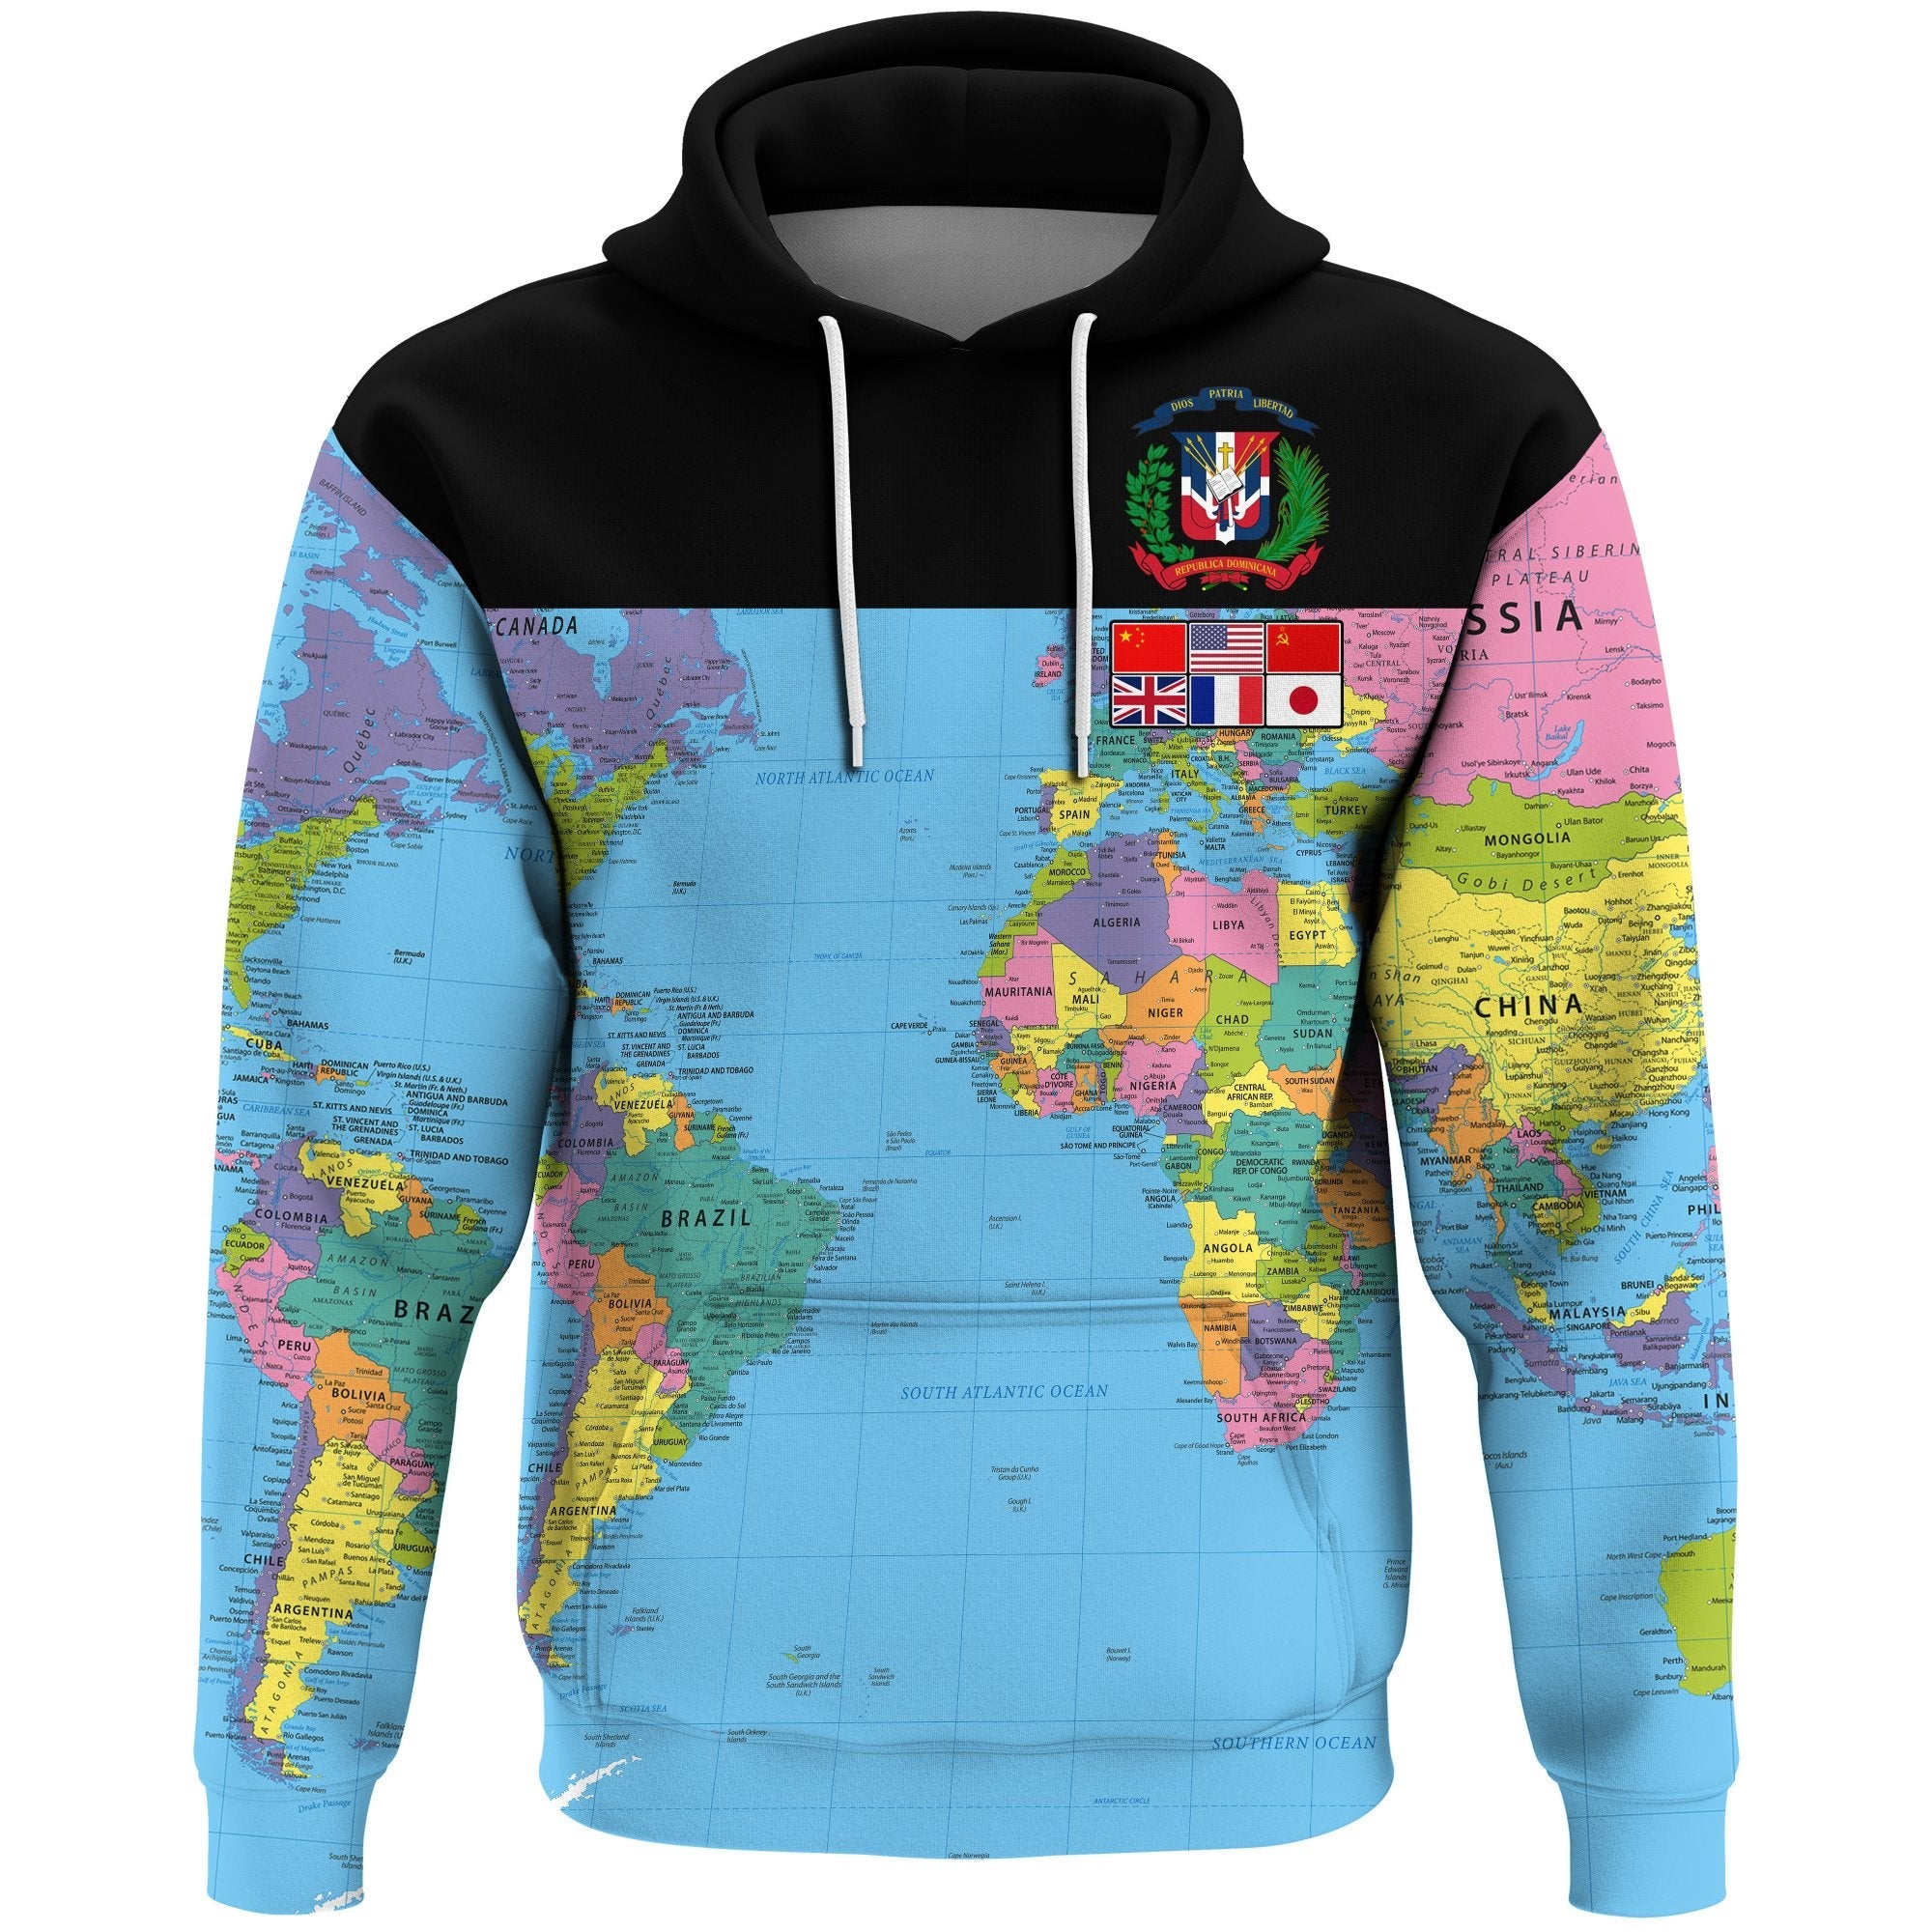 dominican-republic-hoodie